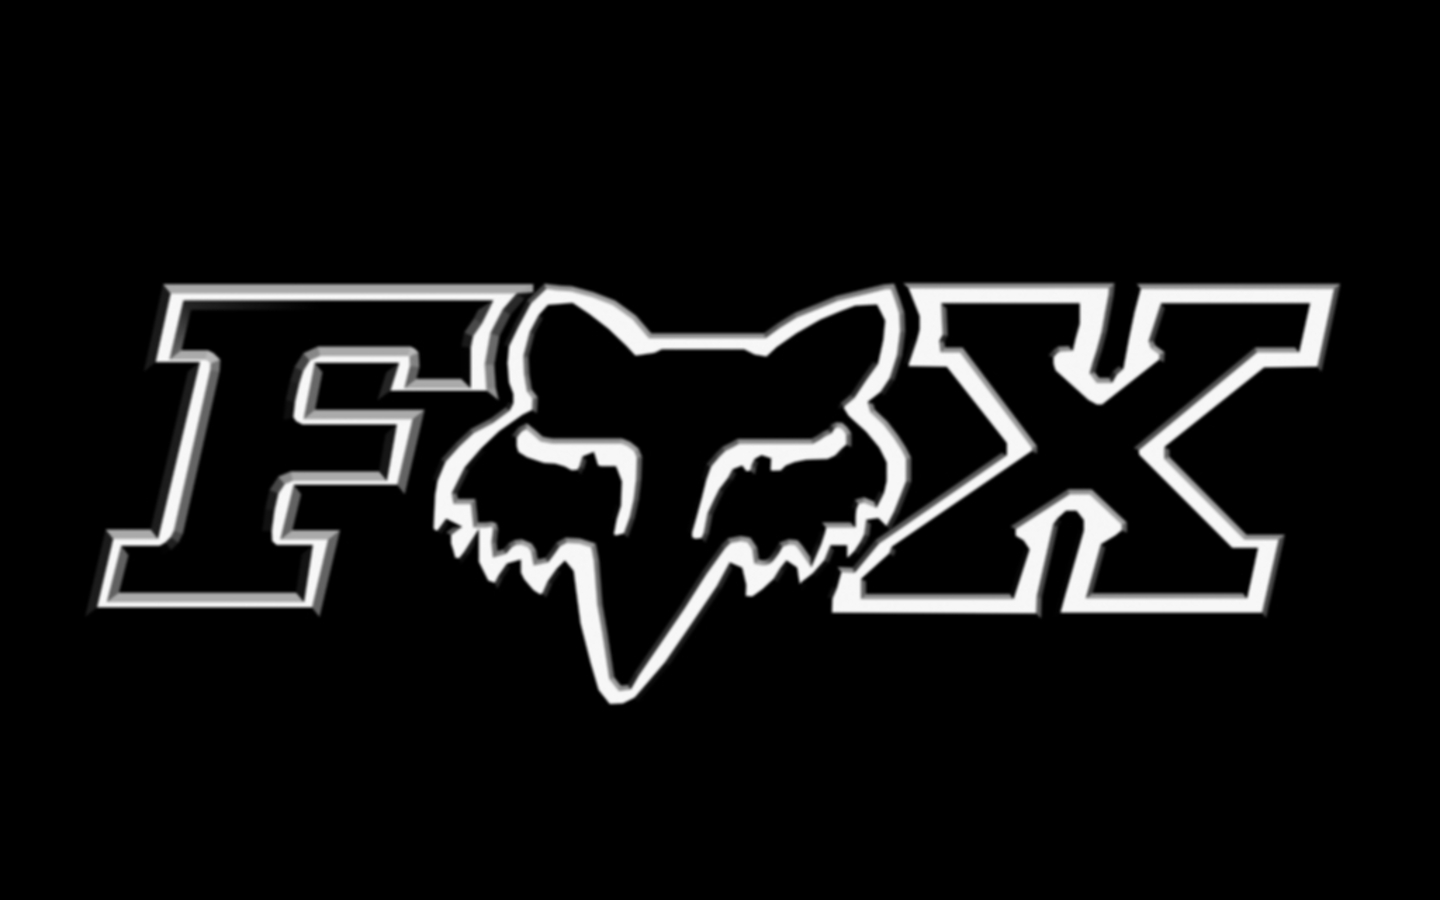 Fox Logo Wallpaper 5247 Hd Wallpapers in Logos   Imagescicom 1440x900